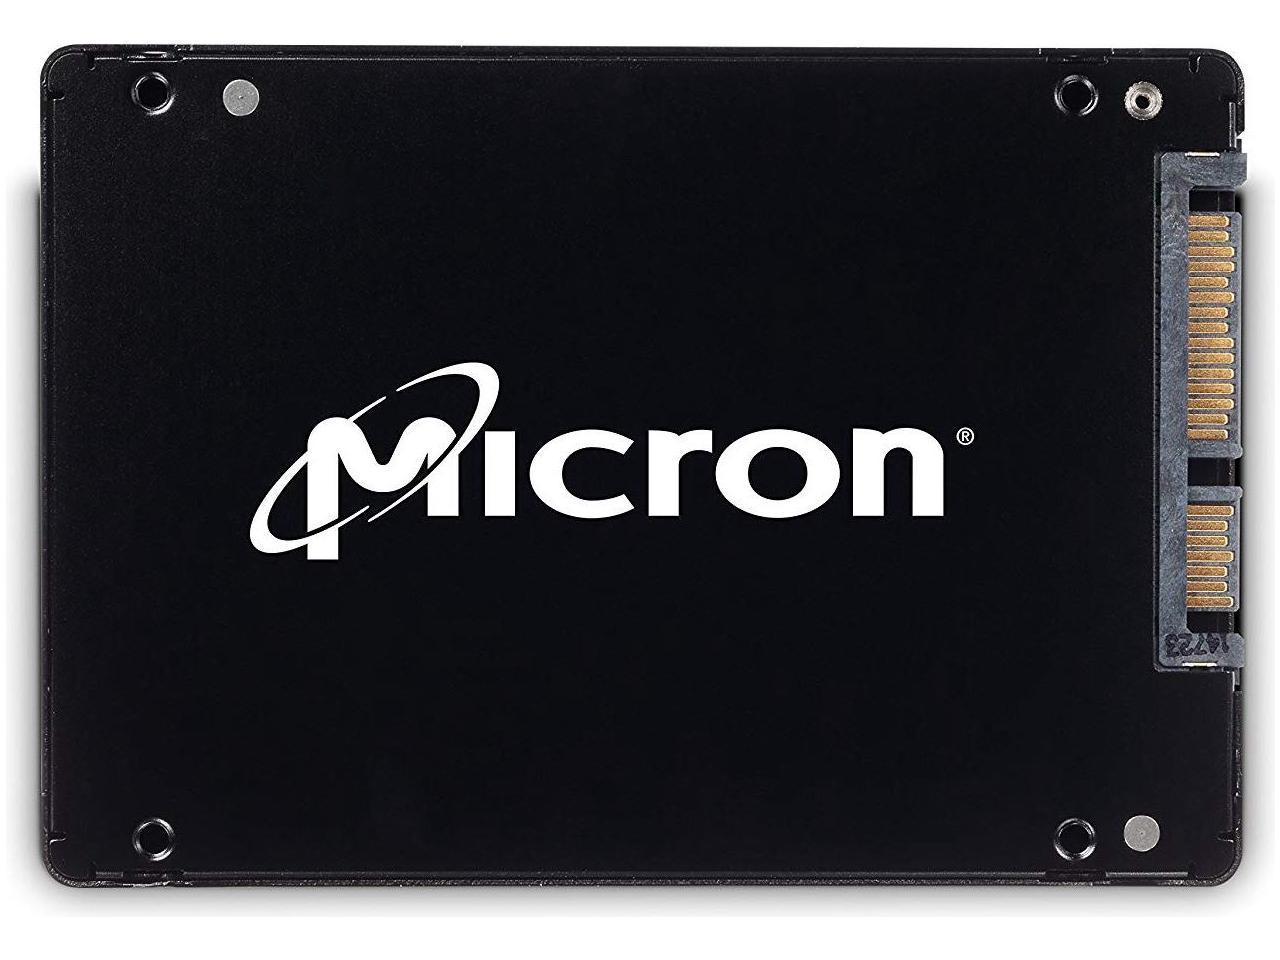 Micron 1100 Series 2.5